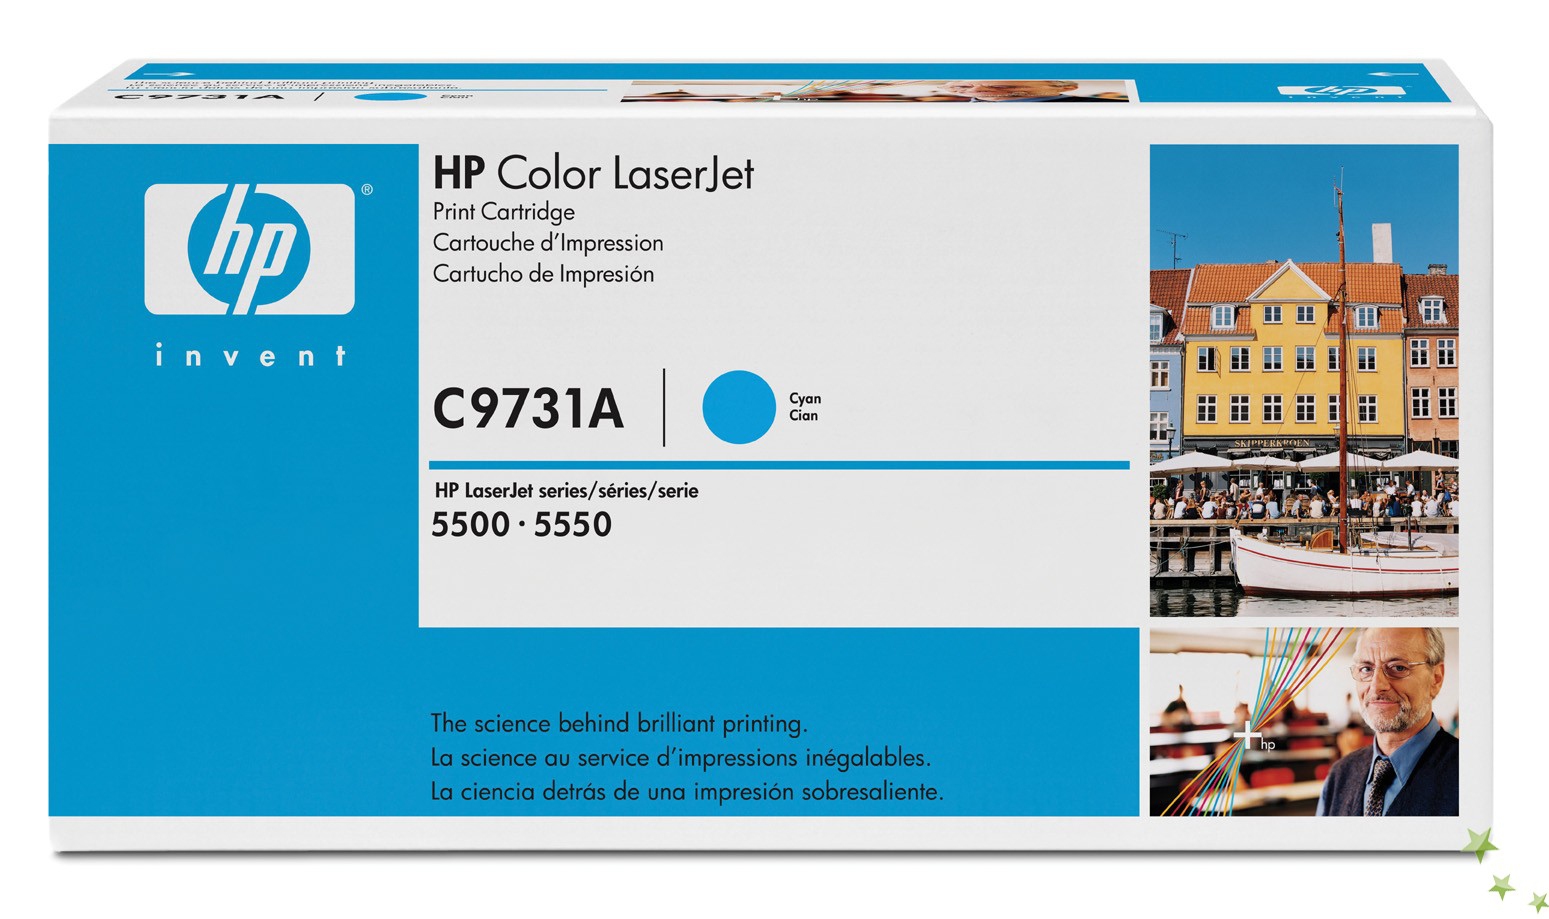 HP Color LaserJet C9731A Cyan Print Cartridge Genuine HP Toner